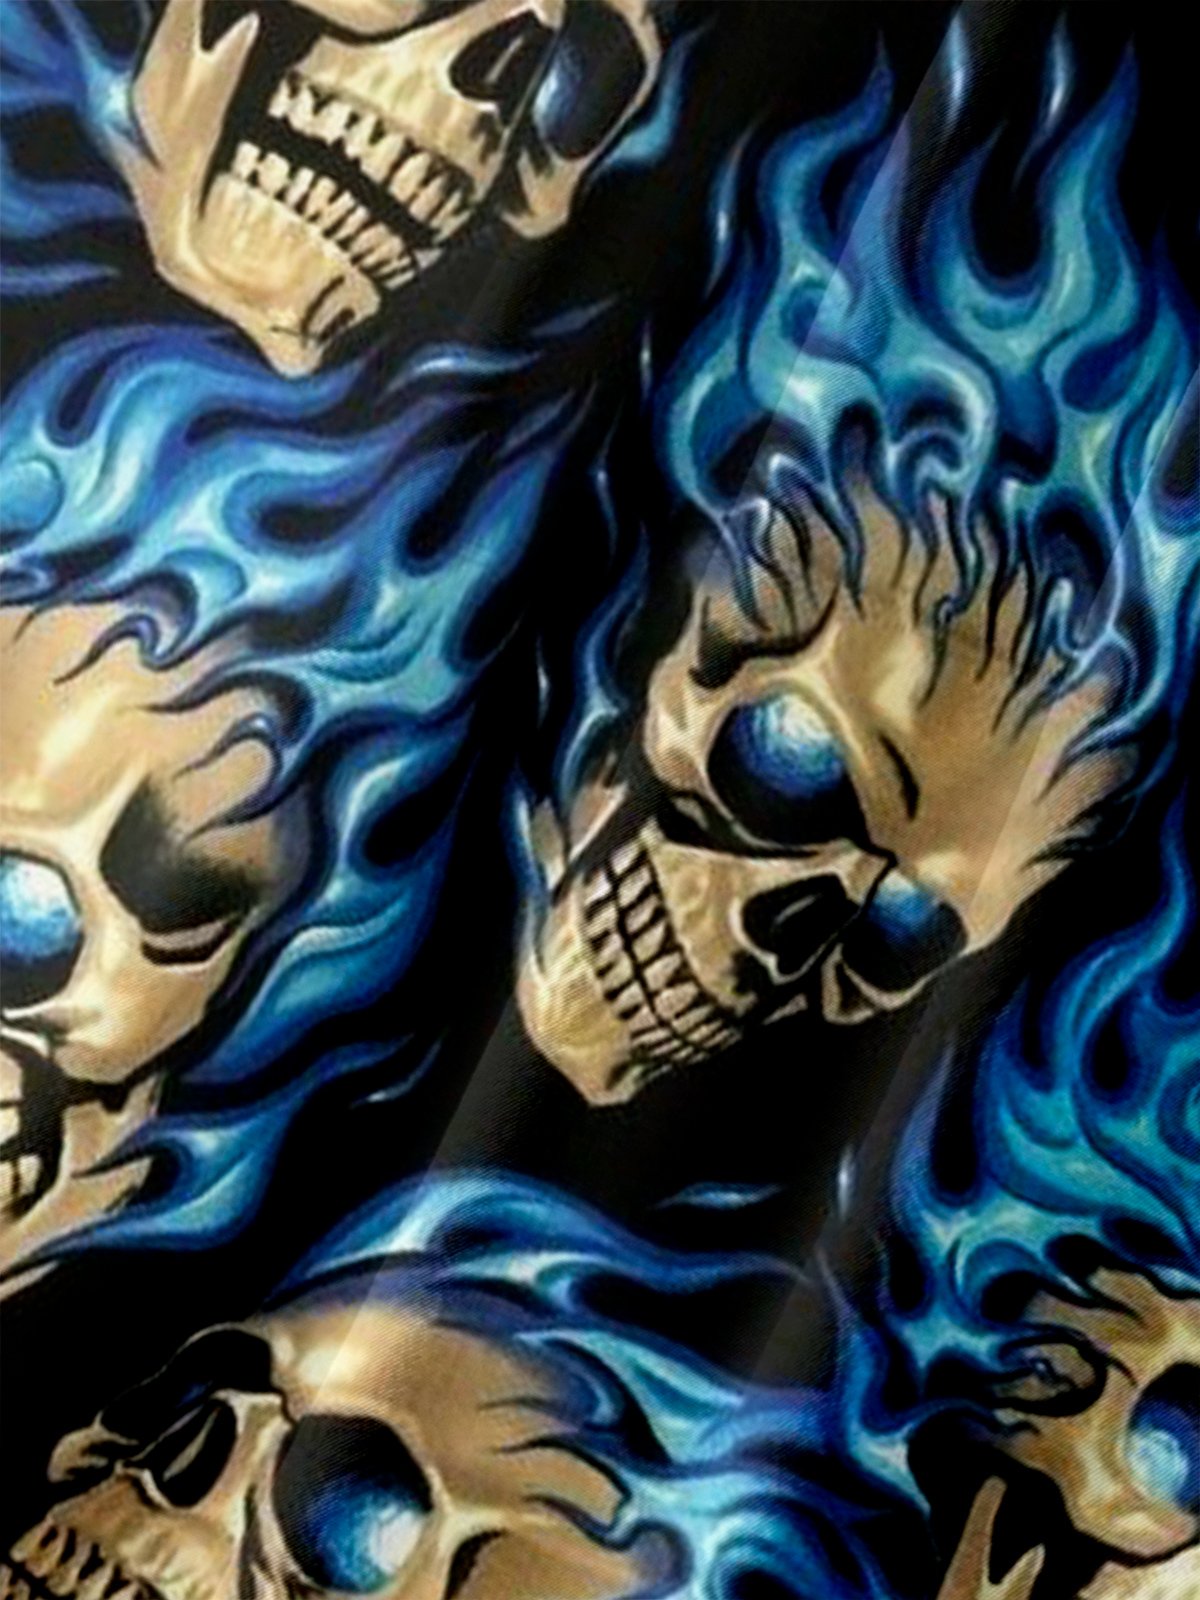 Men's Halloween Skull Print Moisture Wicking Fabric Fashion Lapel Short Sleeve Shirt